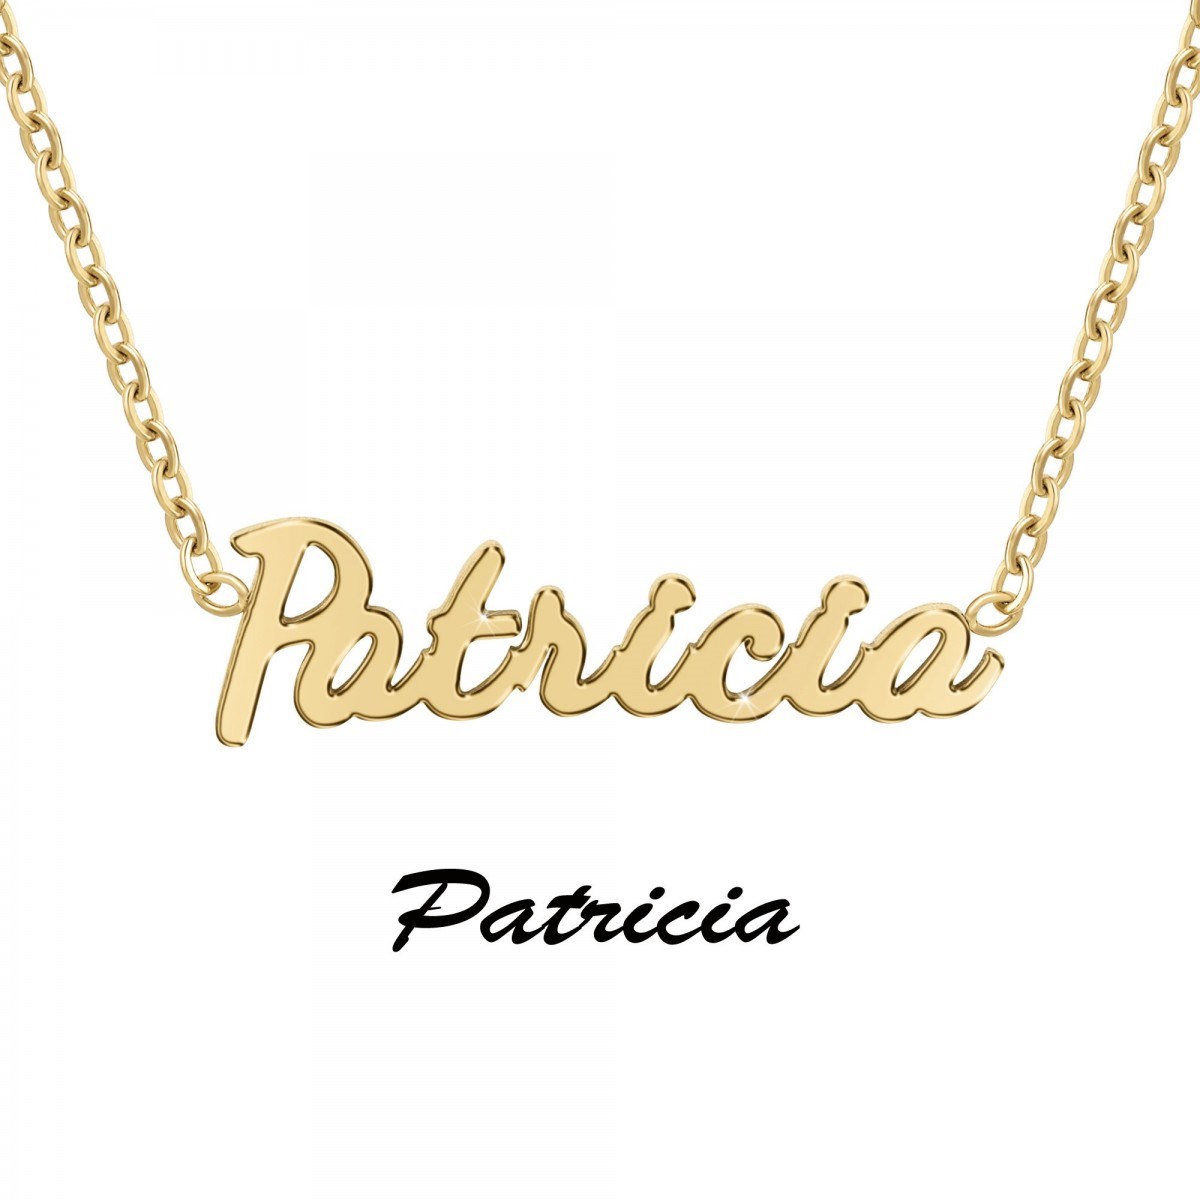 Patricia - Collier prénom - vue 3